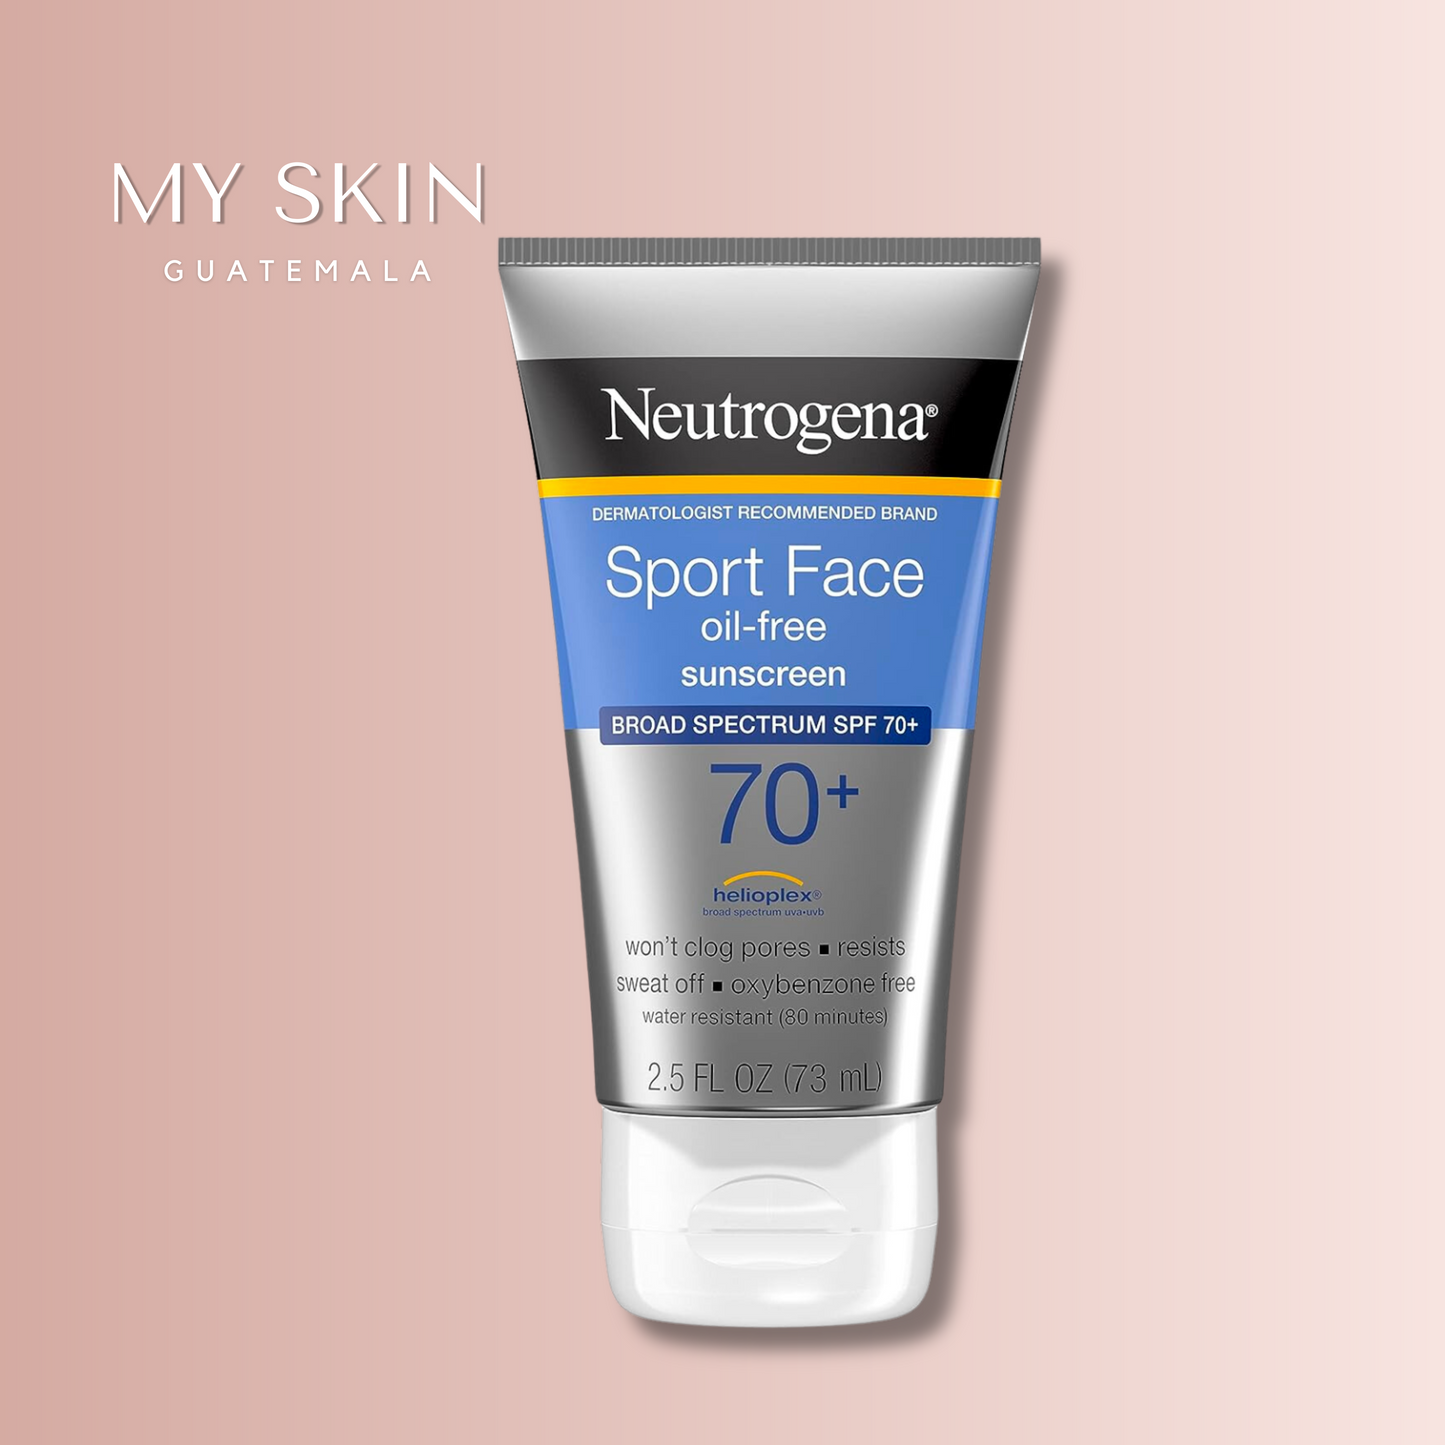 Neutrogena Sport Face Oil-Free Lotion Sunscreen SPF 70+